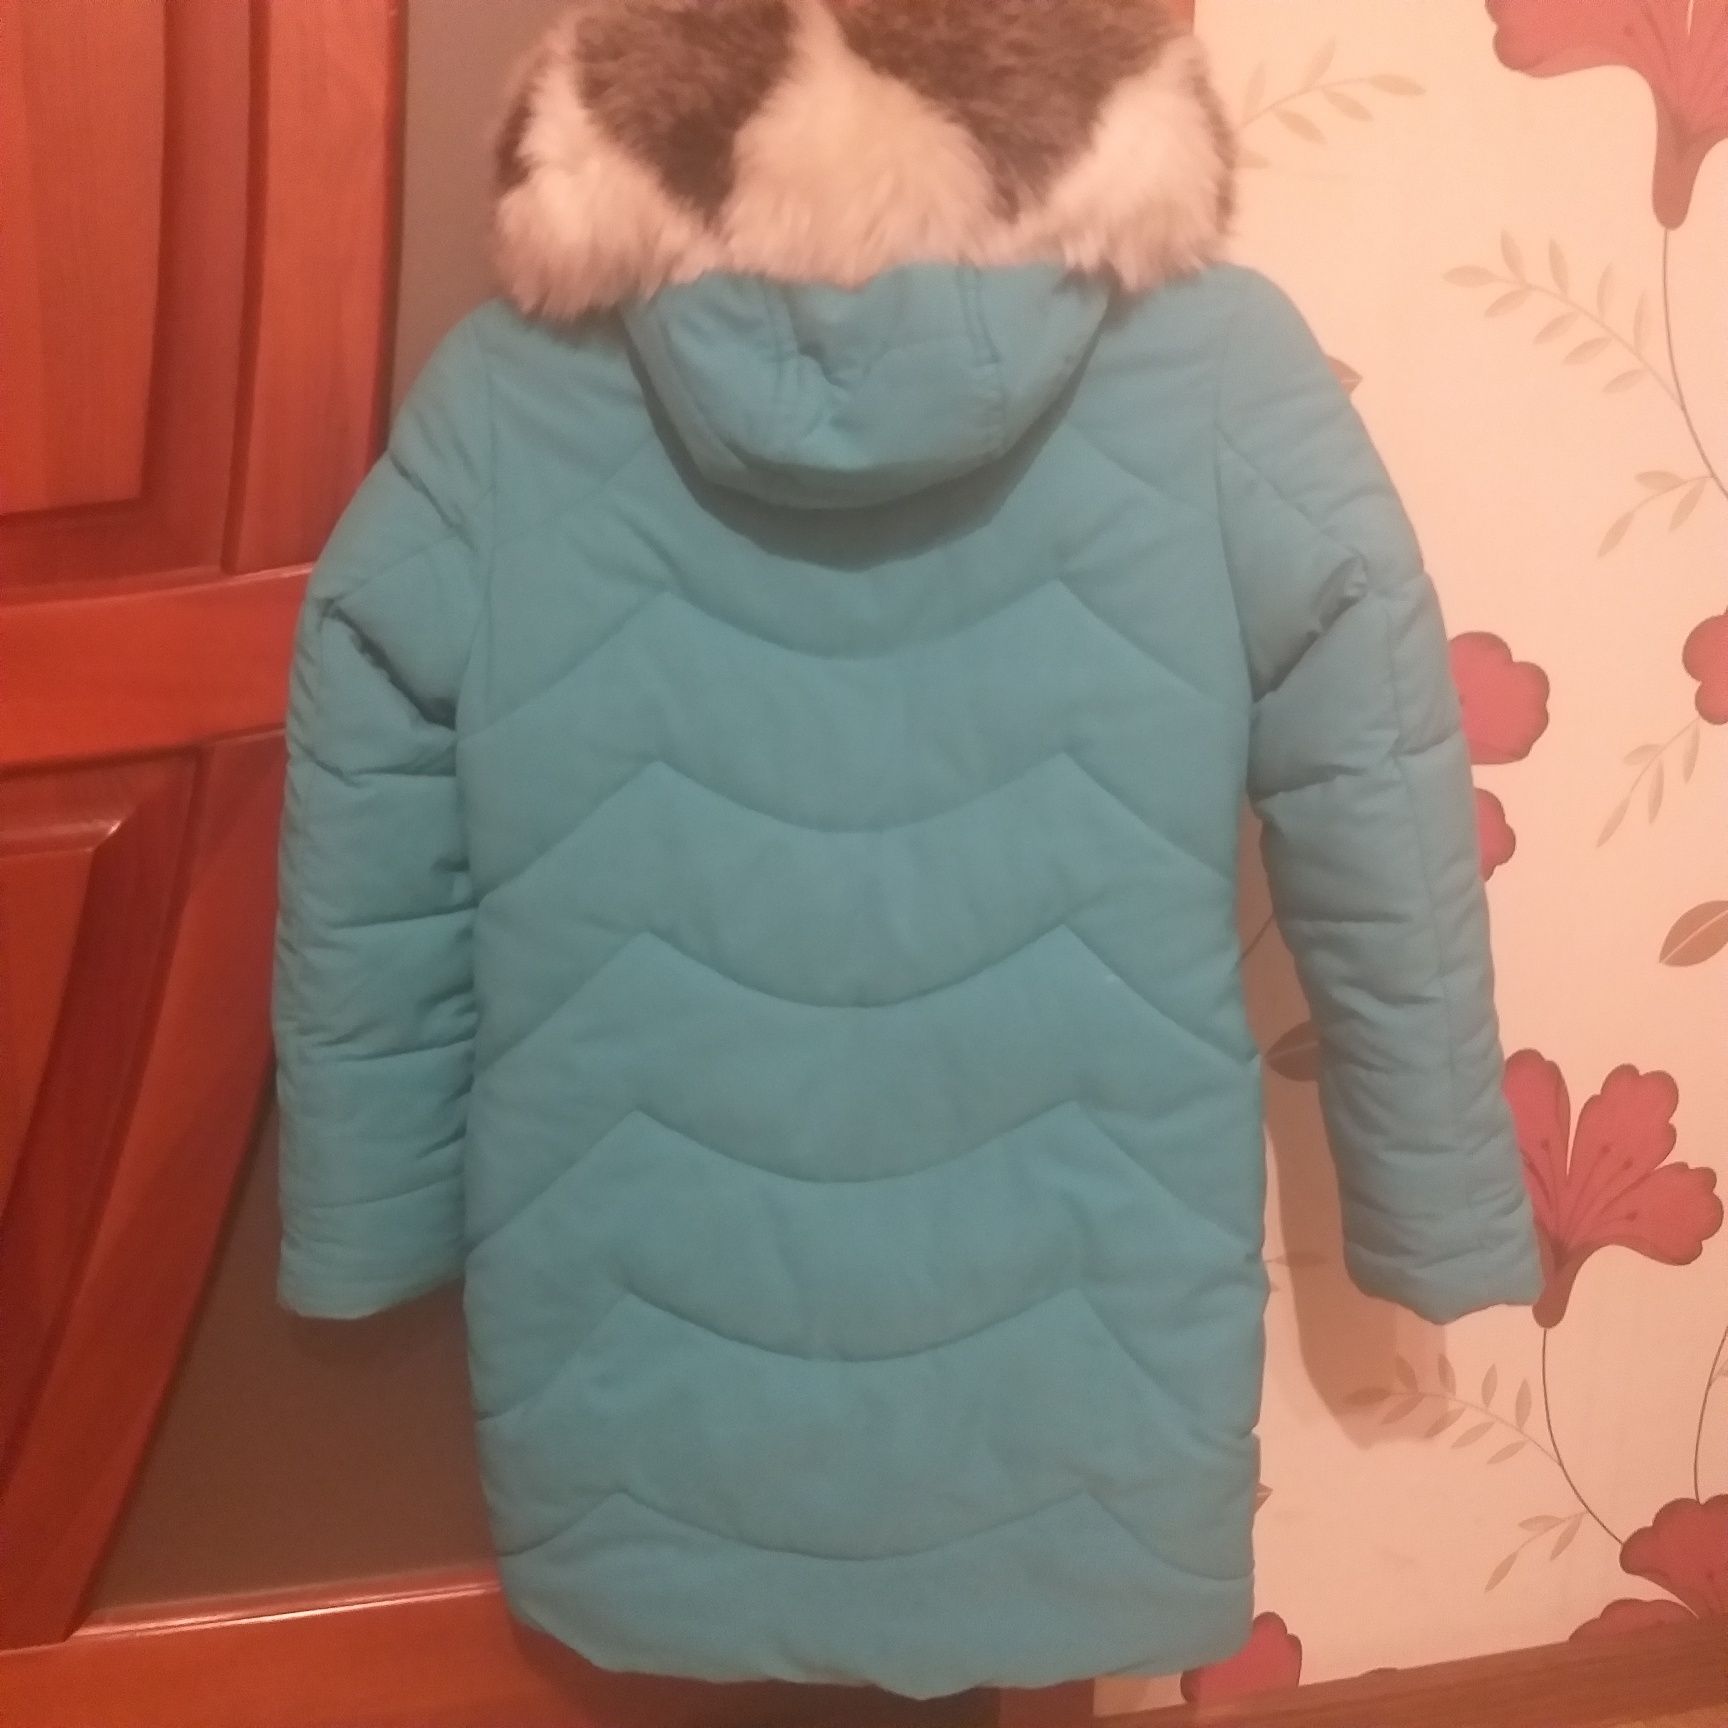 Курточка зимняя